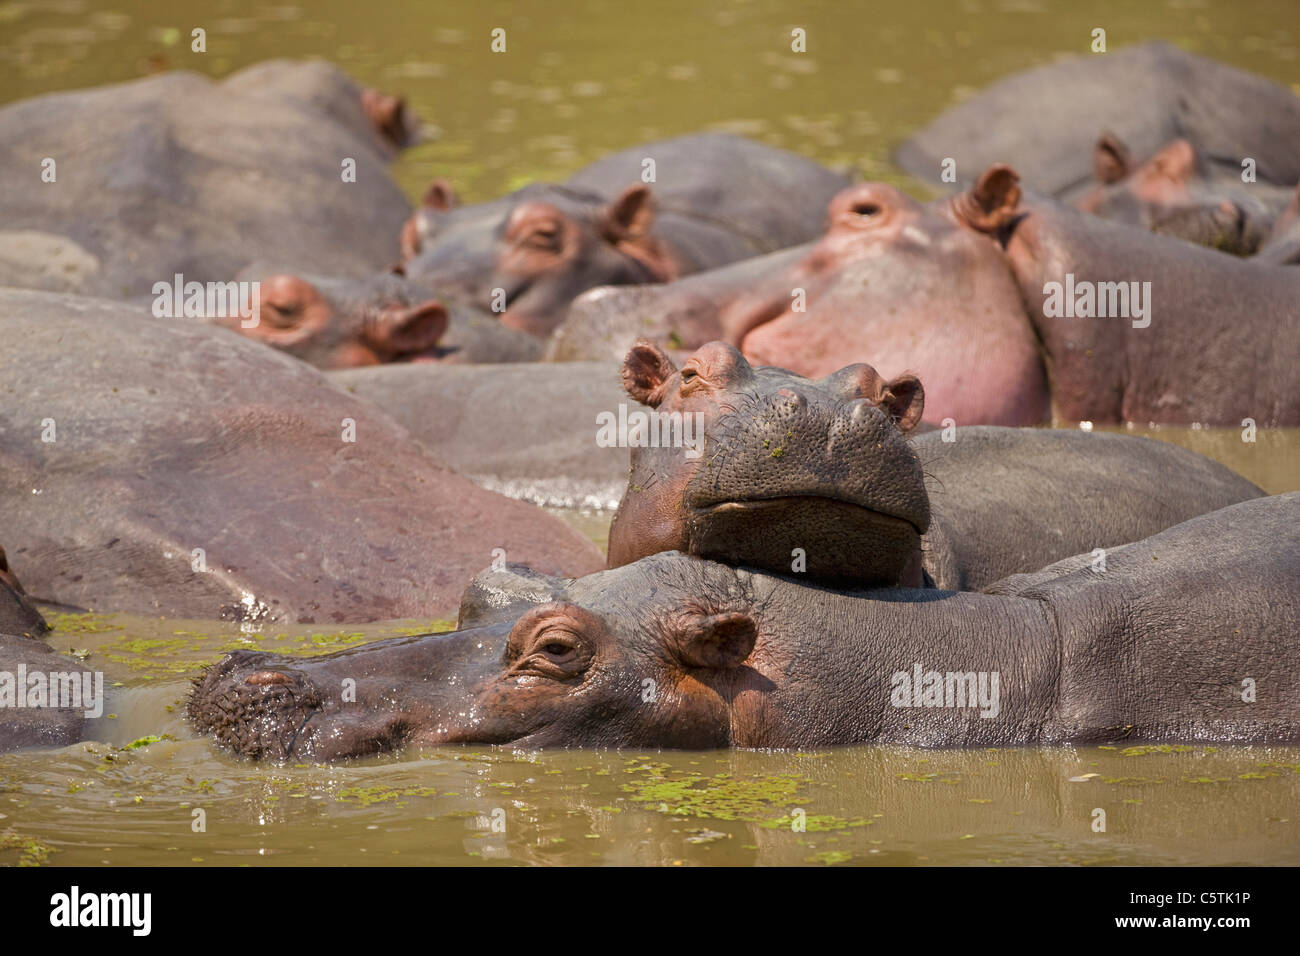 Africa, Sambia, Group of hippopotami (Hippopotamus amphibius) in waterhole Stock Photo